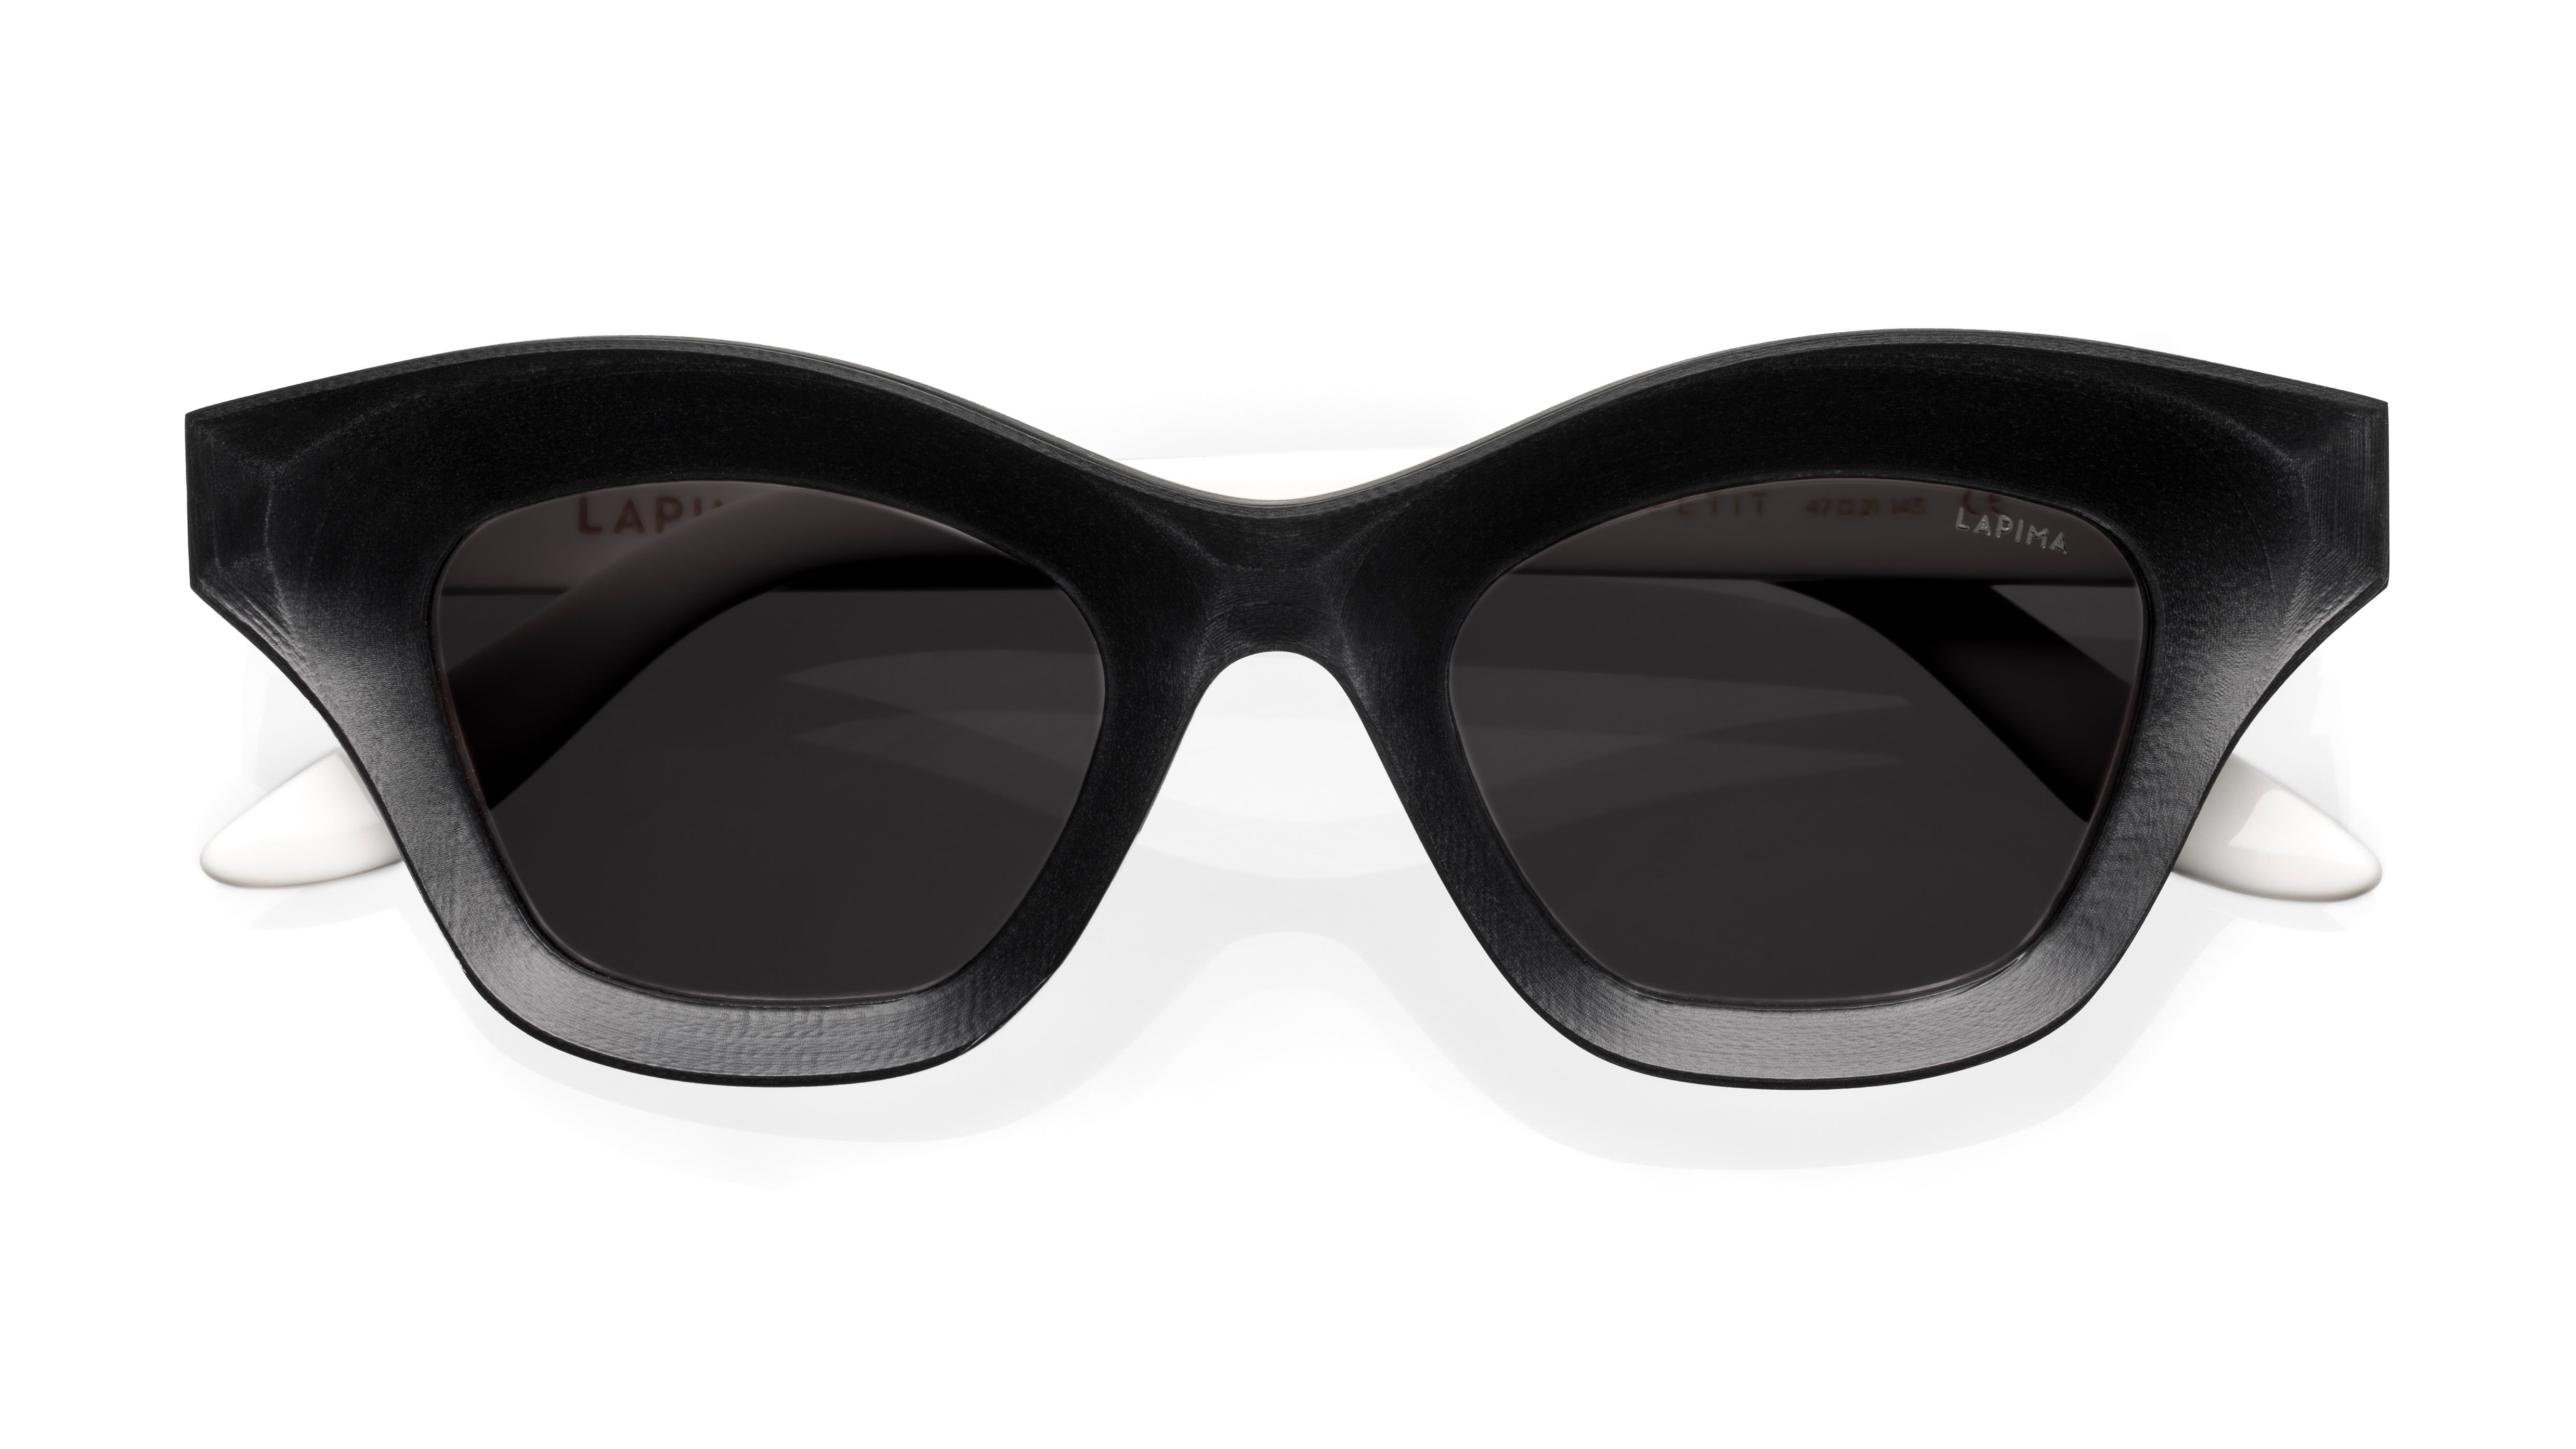 Black Cat-eye tortoiseshell-acetate sunglasses